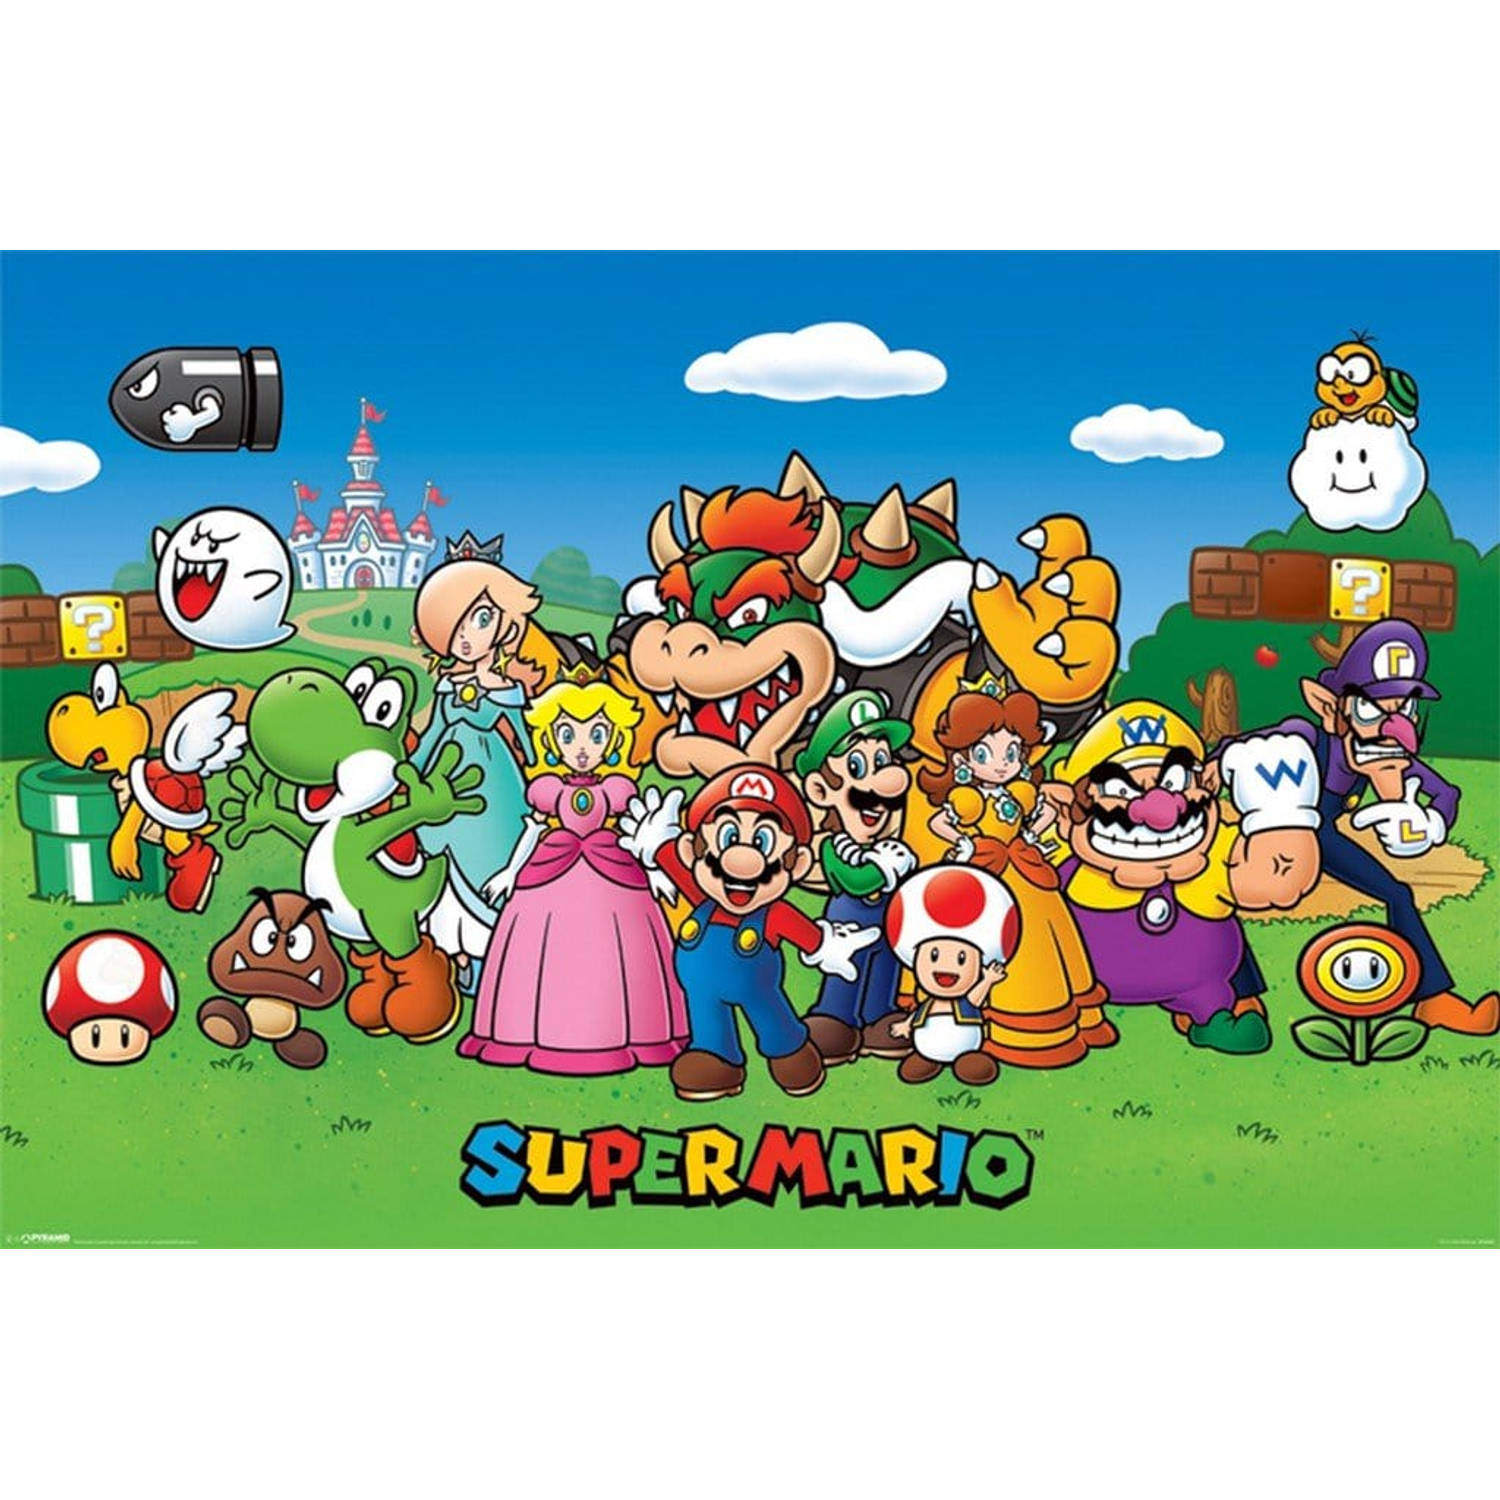 Nintendo Super Mario Characters 24 x 36 Inches Maxi Poster